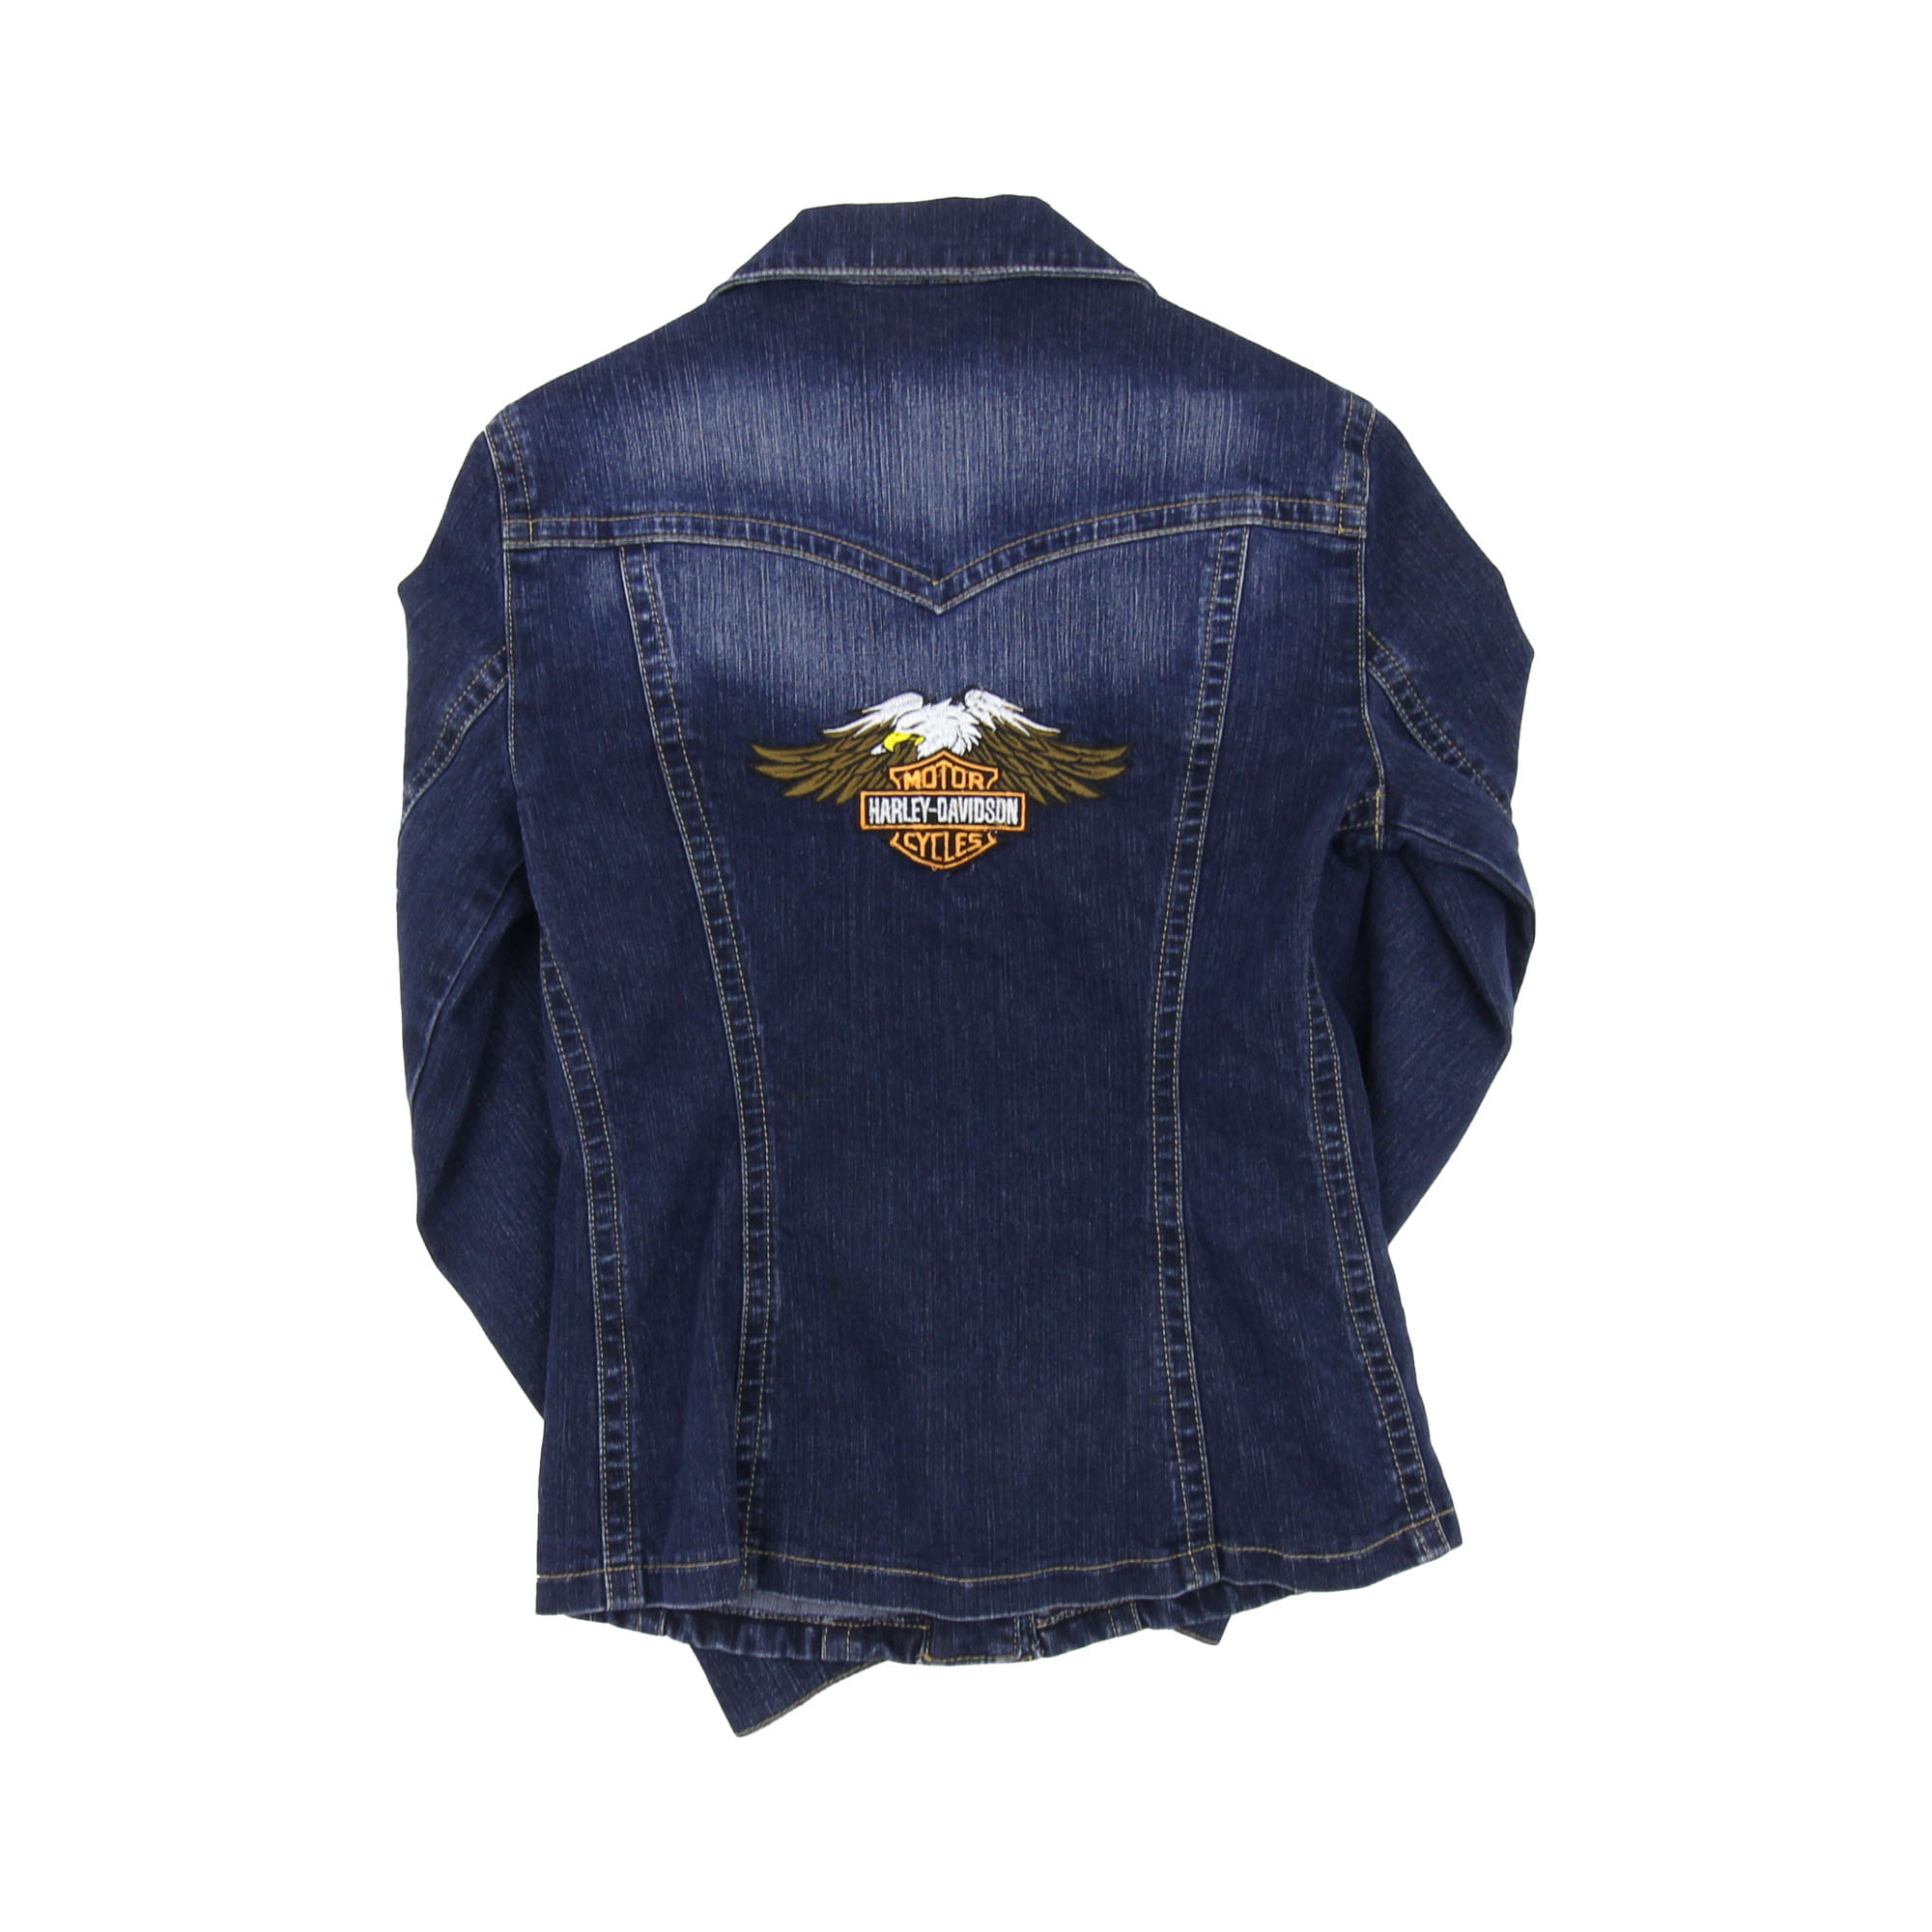 Harley Davidson Jeans Jacket - Women's S